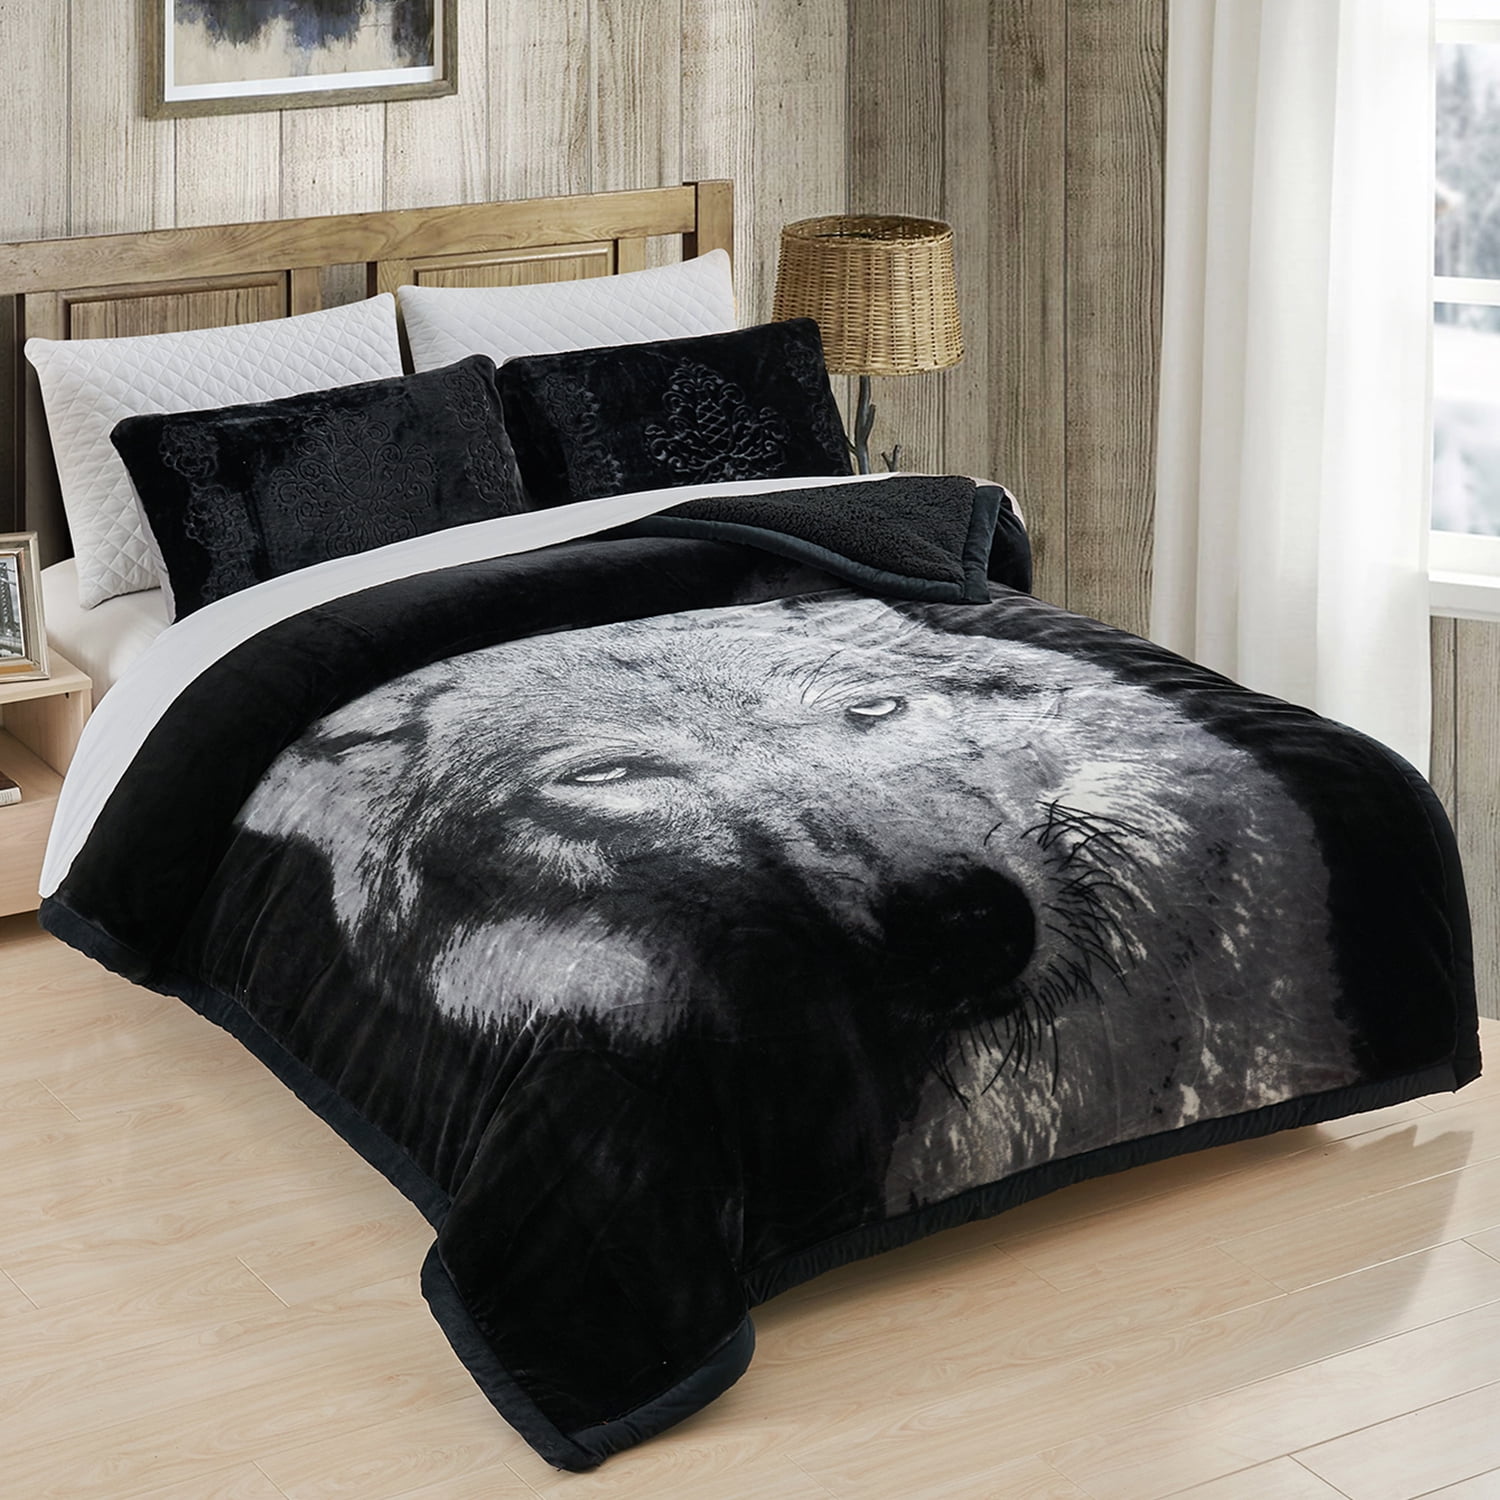 Borrega Charcoal Grey KING Size sherpa Fleece Comforter Geometric Stitch Blanket 